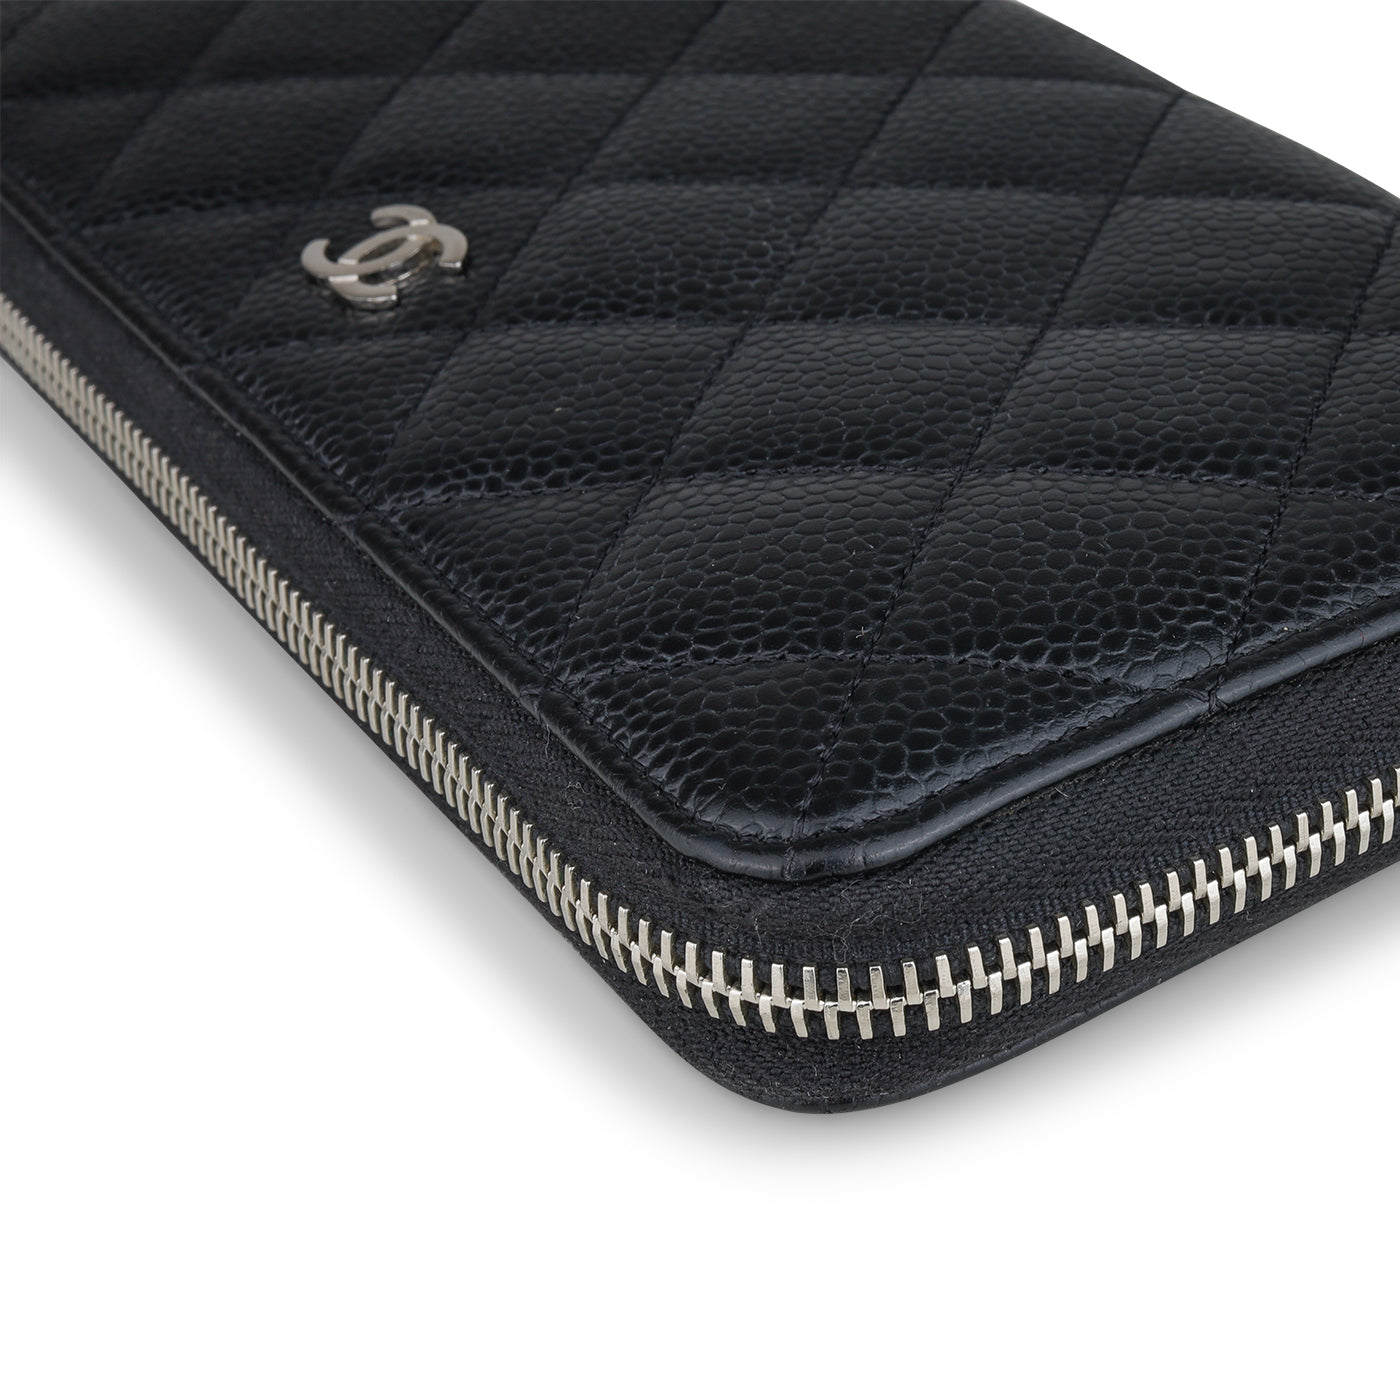 Chanel - Classic Long Zipped Wallet - Black Caviar SHW - Mint